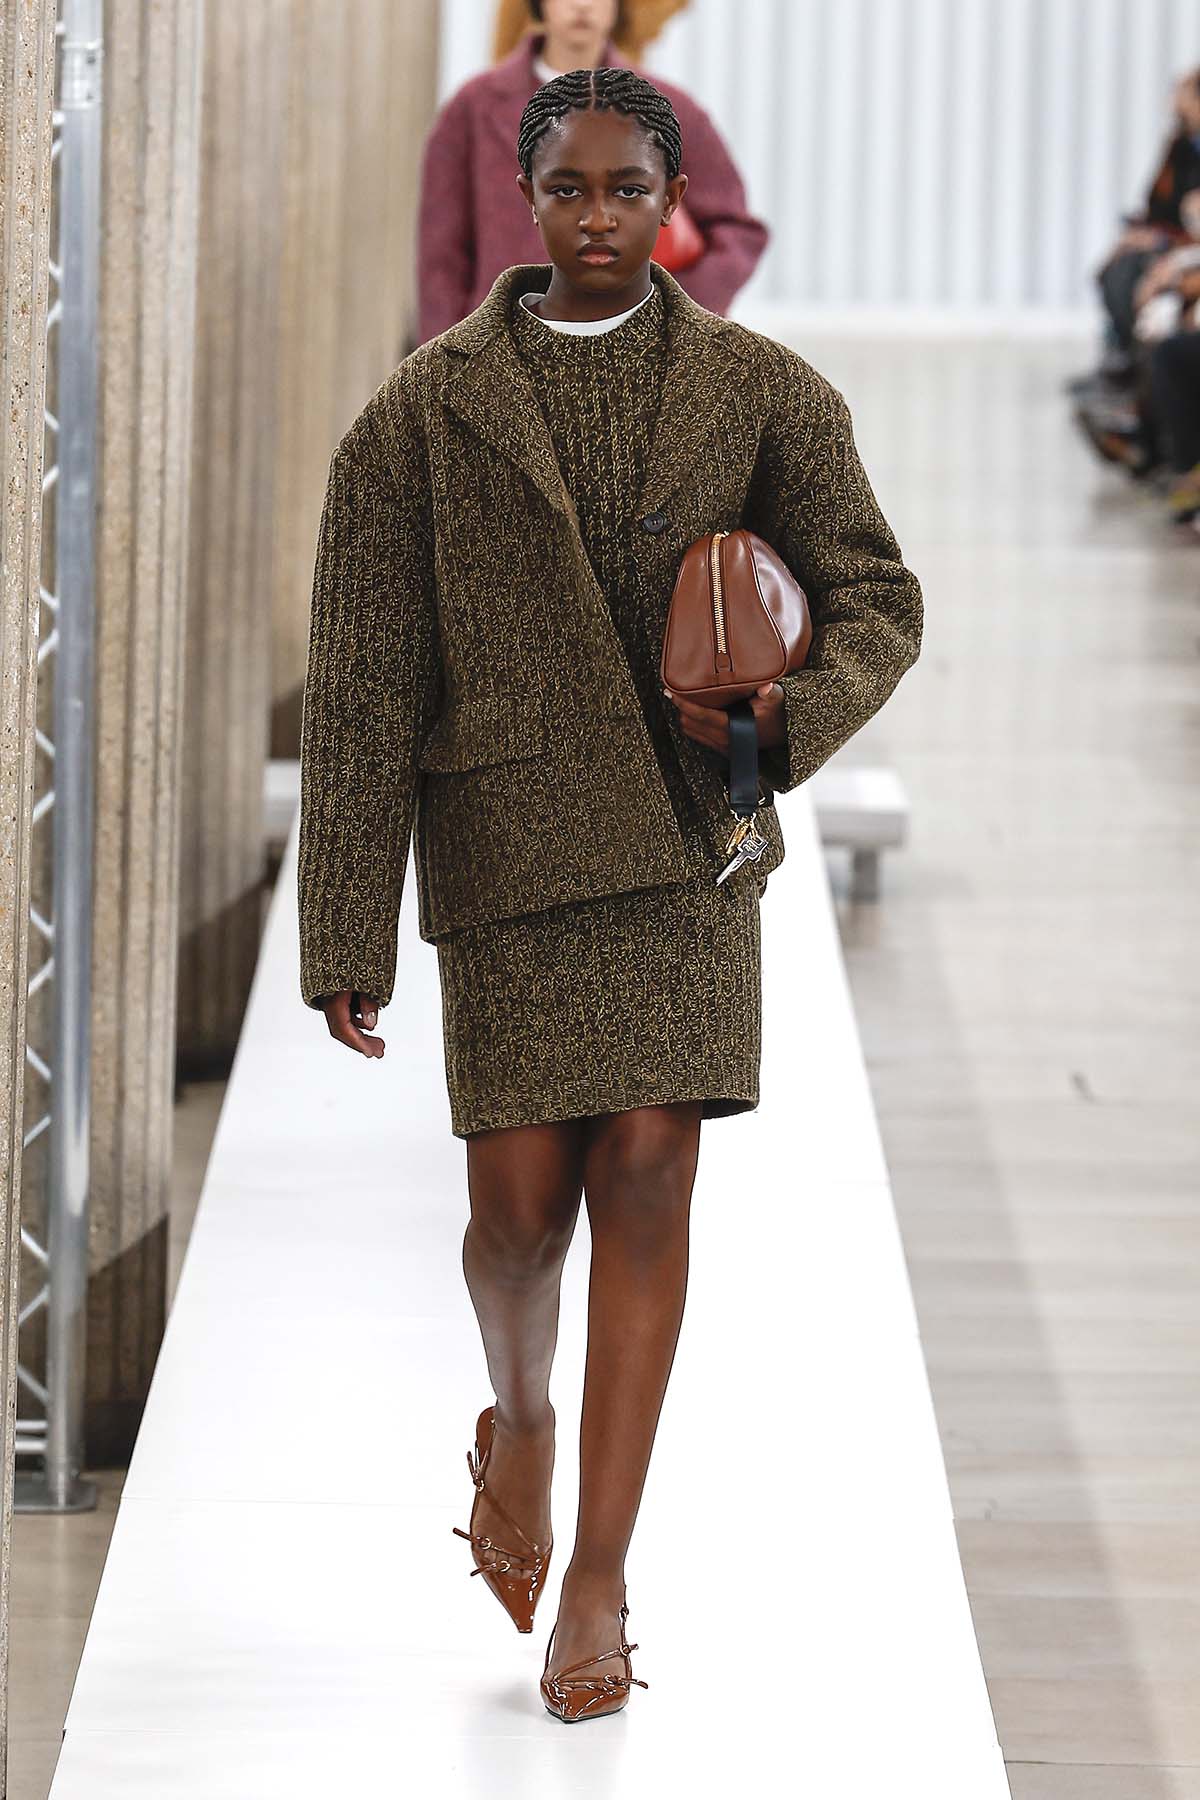 Tyga attends the Louis Vuitton Menswear Fall/Winter 2020-2021 show